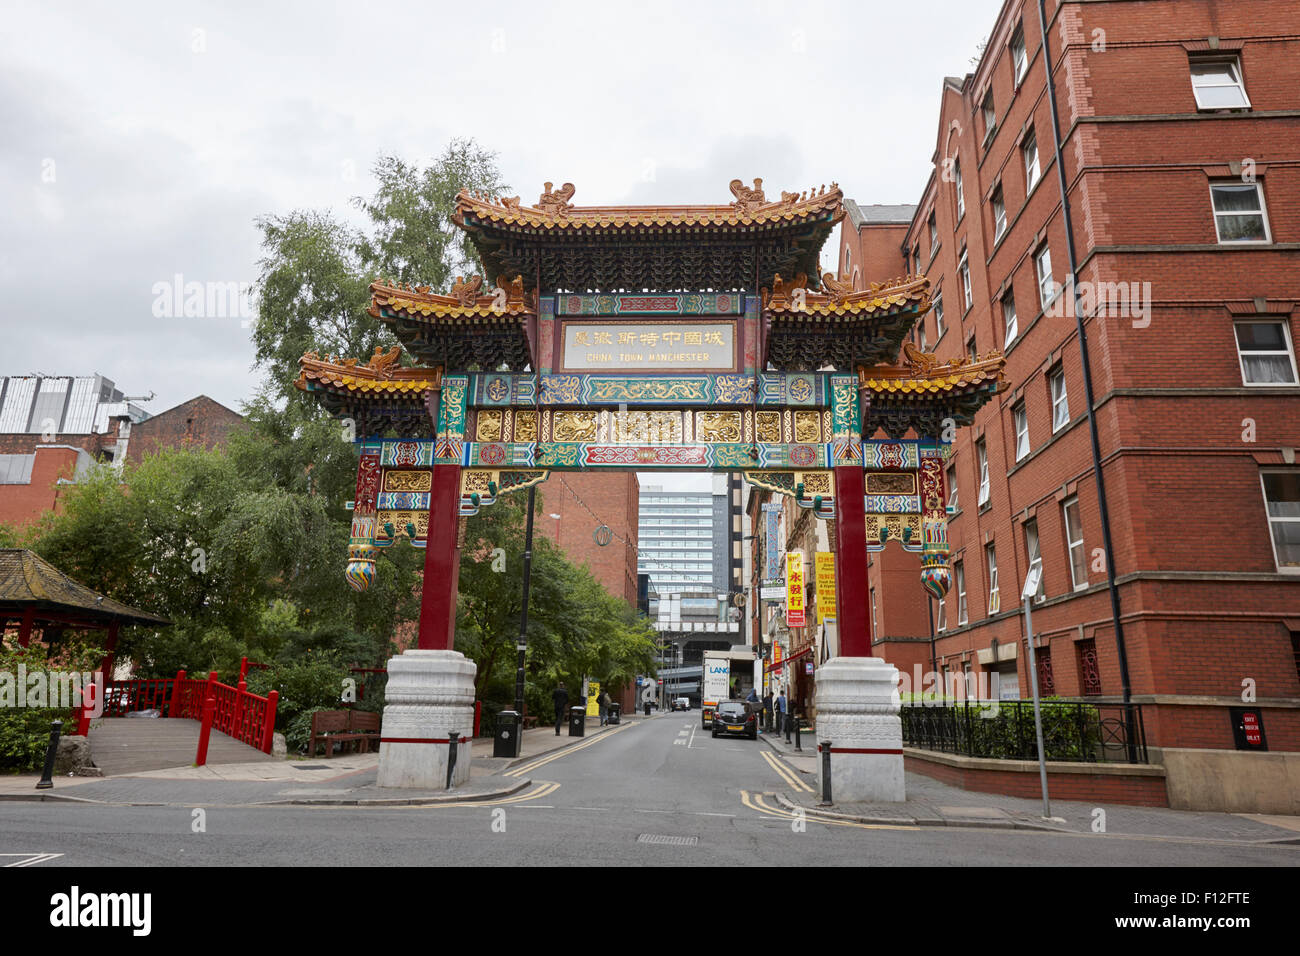 chinese arch chinatown Manchester uk Stock Photo